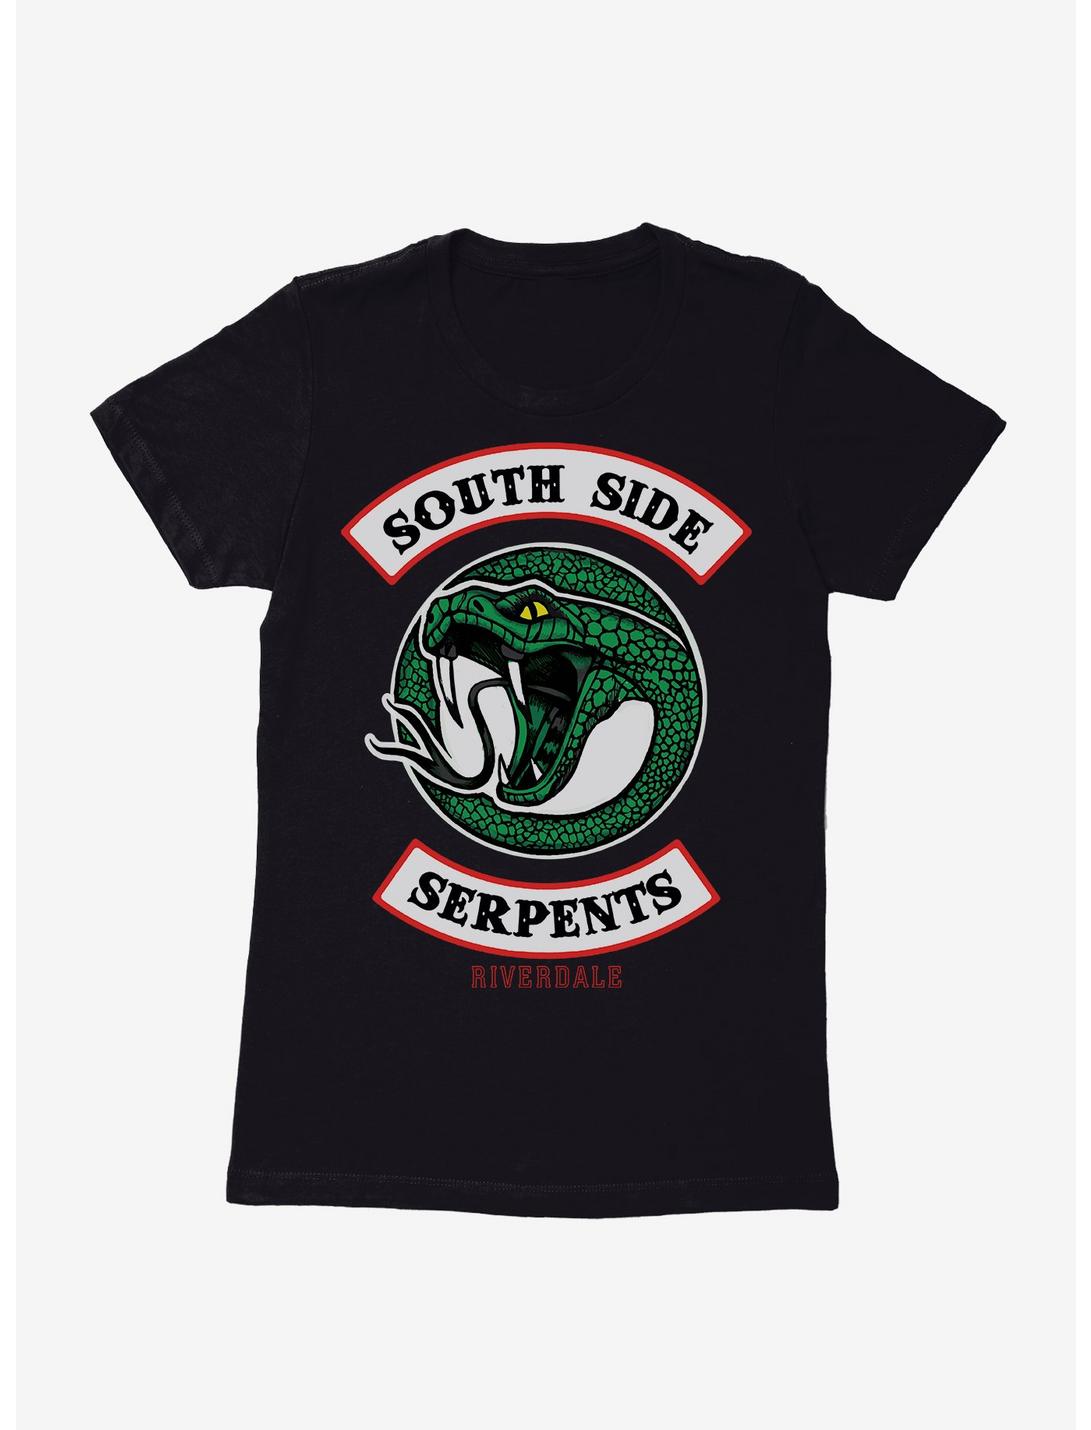 Extra Soft Riverdale South Side Serpents Girls T-Shirt, BLACK, hi-res